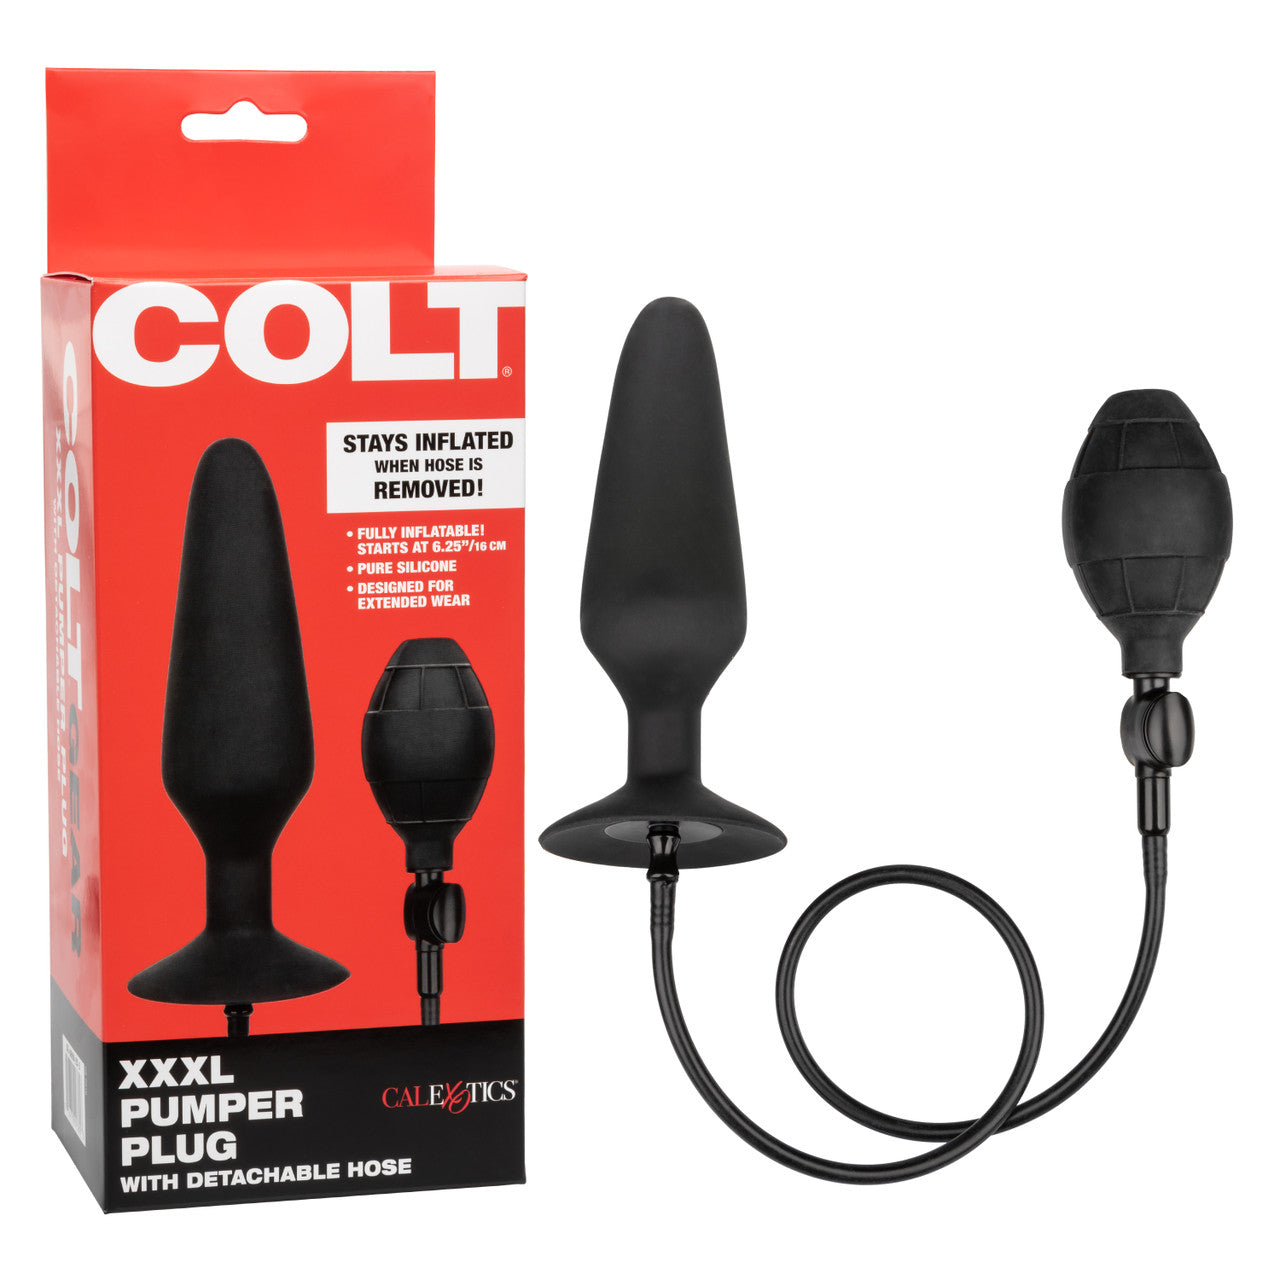 Colt XXXL Pumper Plug with Detachable Hose - Thorn & Feather Sex Toy Canada